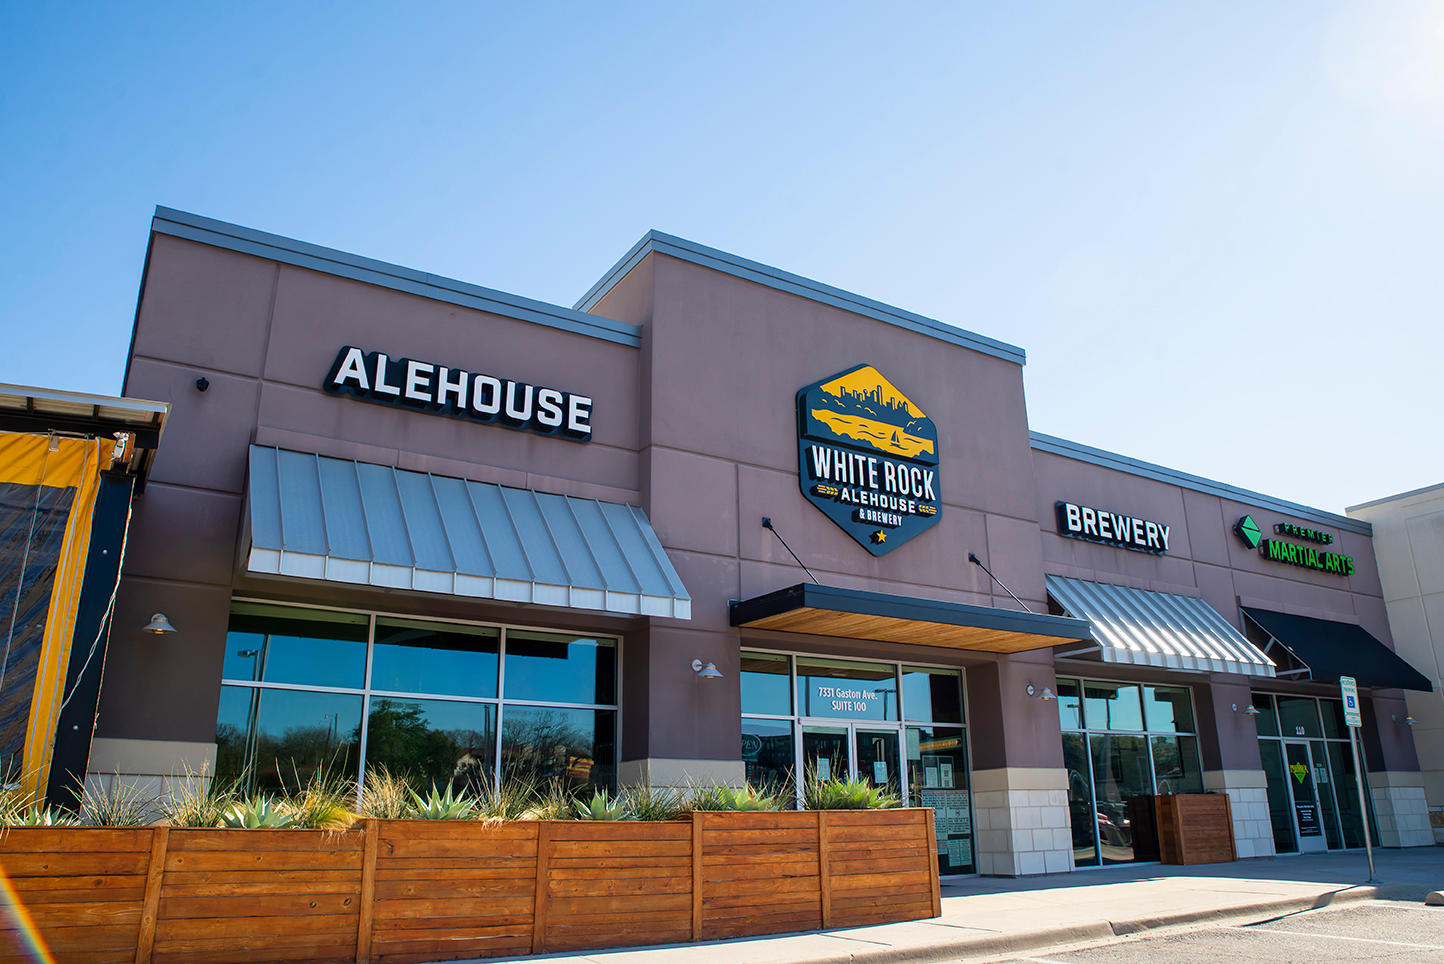 White Rock Alehouse & Brewery at Arboretum Village Shopping Center